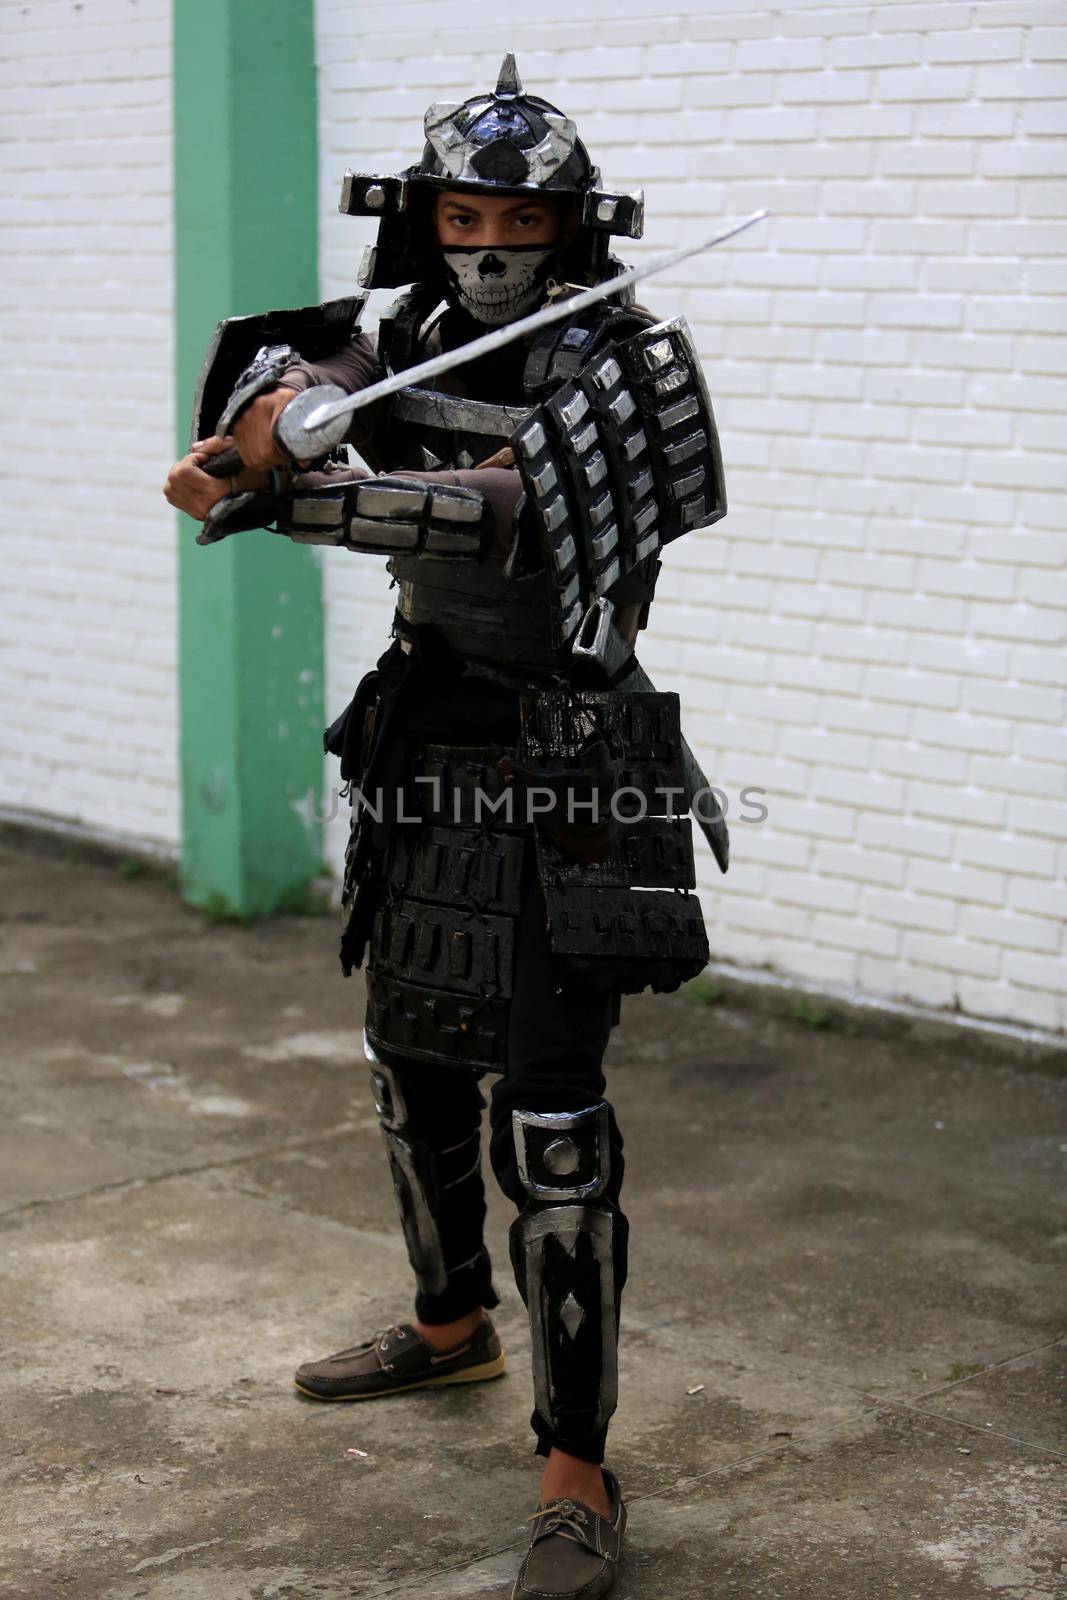 salvador, bahia, brazil - april 24, 2017: Young man wears armor made of imitation paper warrior with armor in Salvador city.